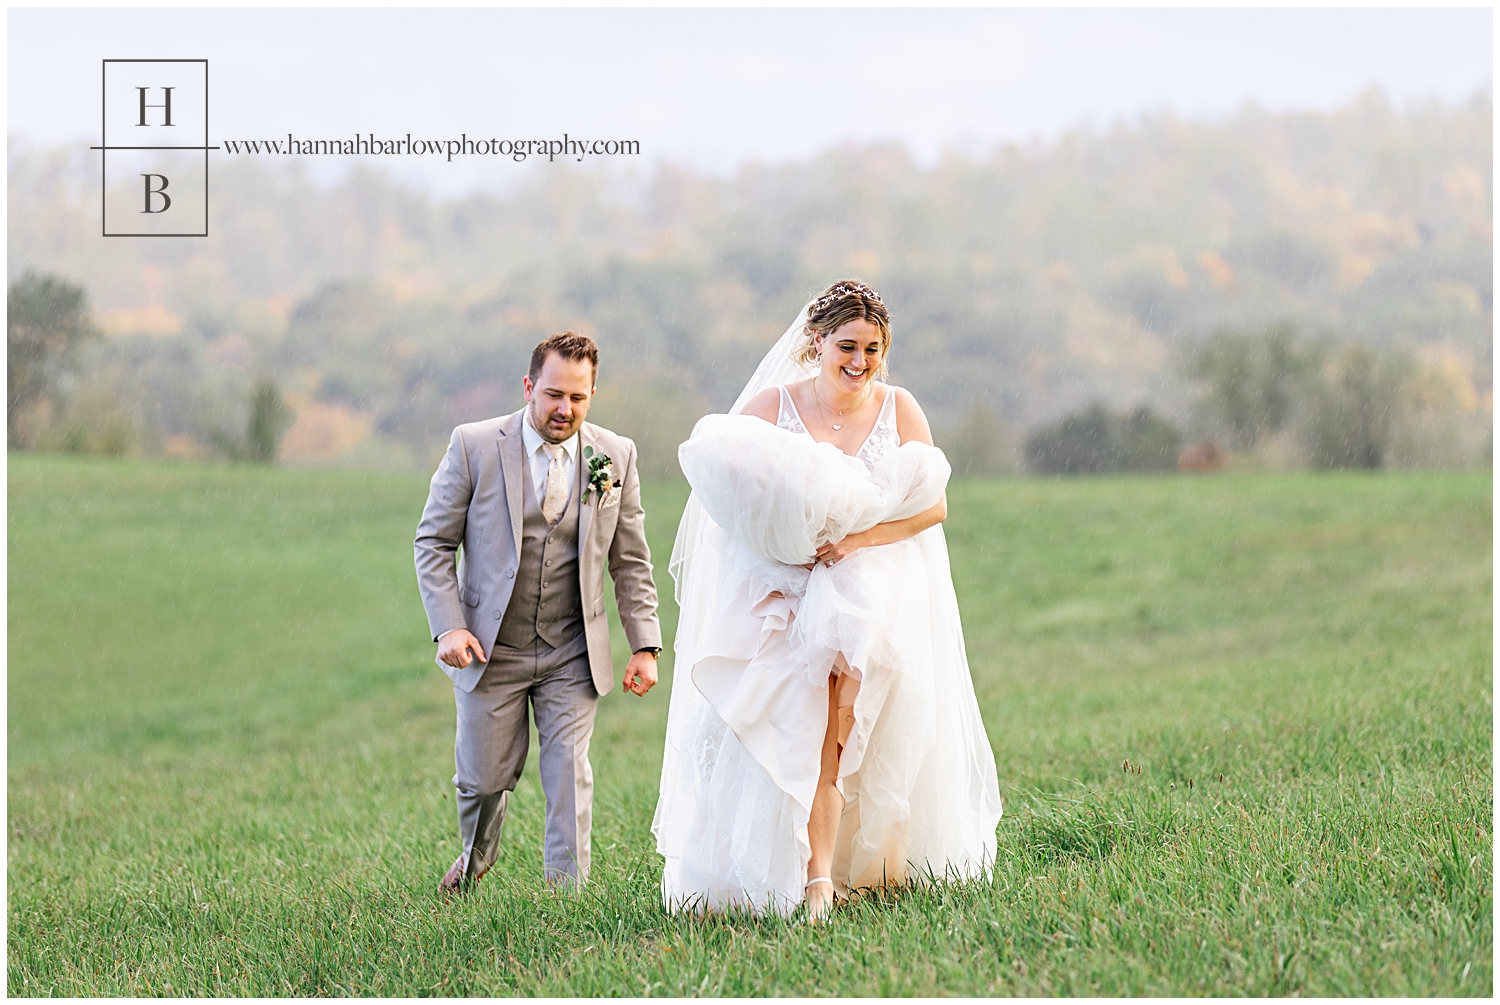 Bride carries dress through field as groom follows behind.